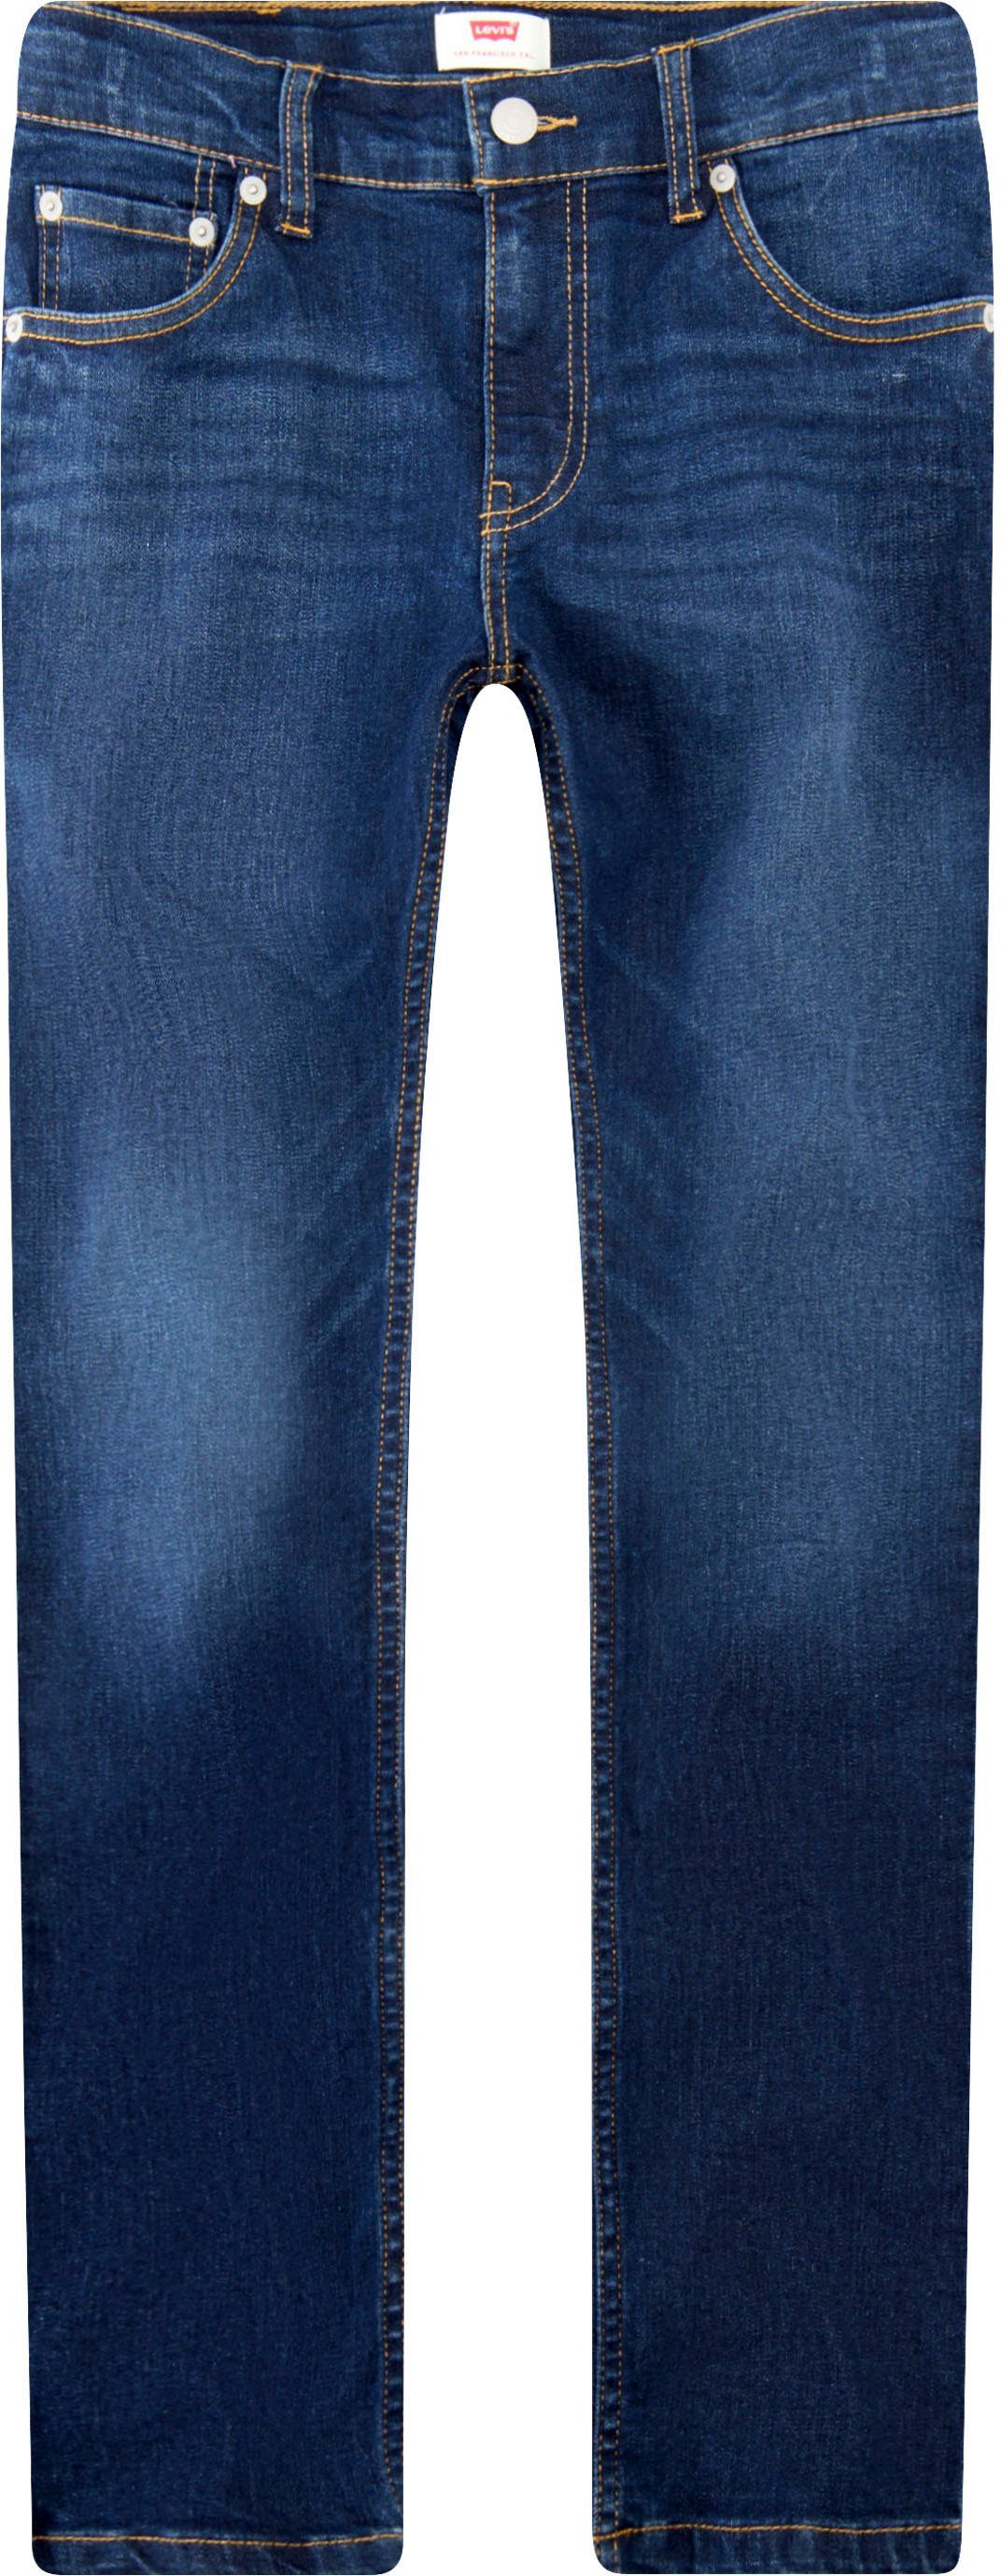 510 used FIT BOYS Skinny-fit-Jeans JEANS for Kids SKINNY dark-blue Levi's®